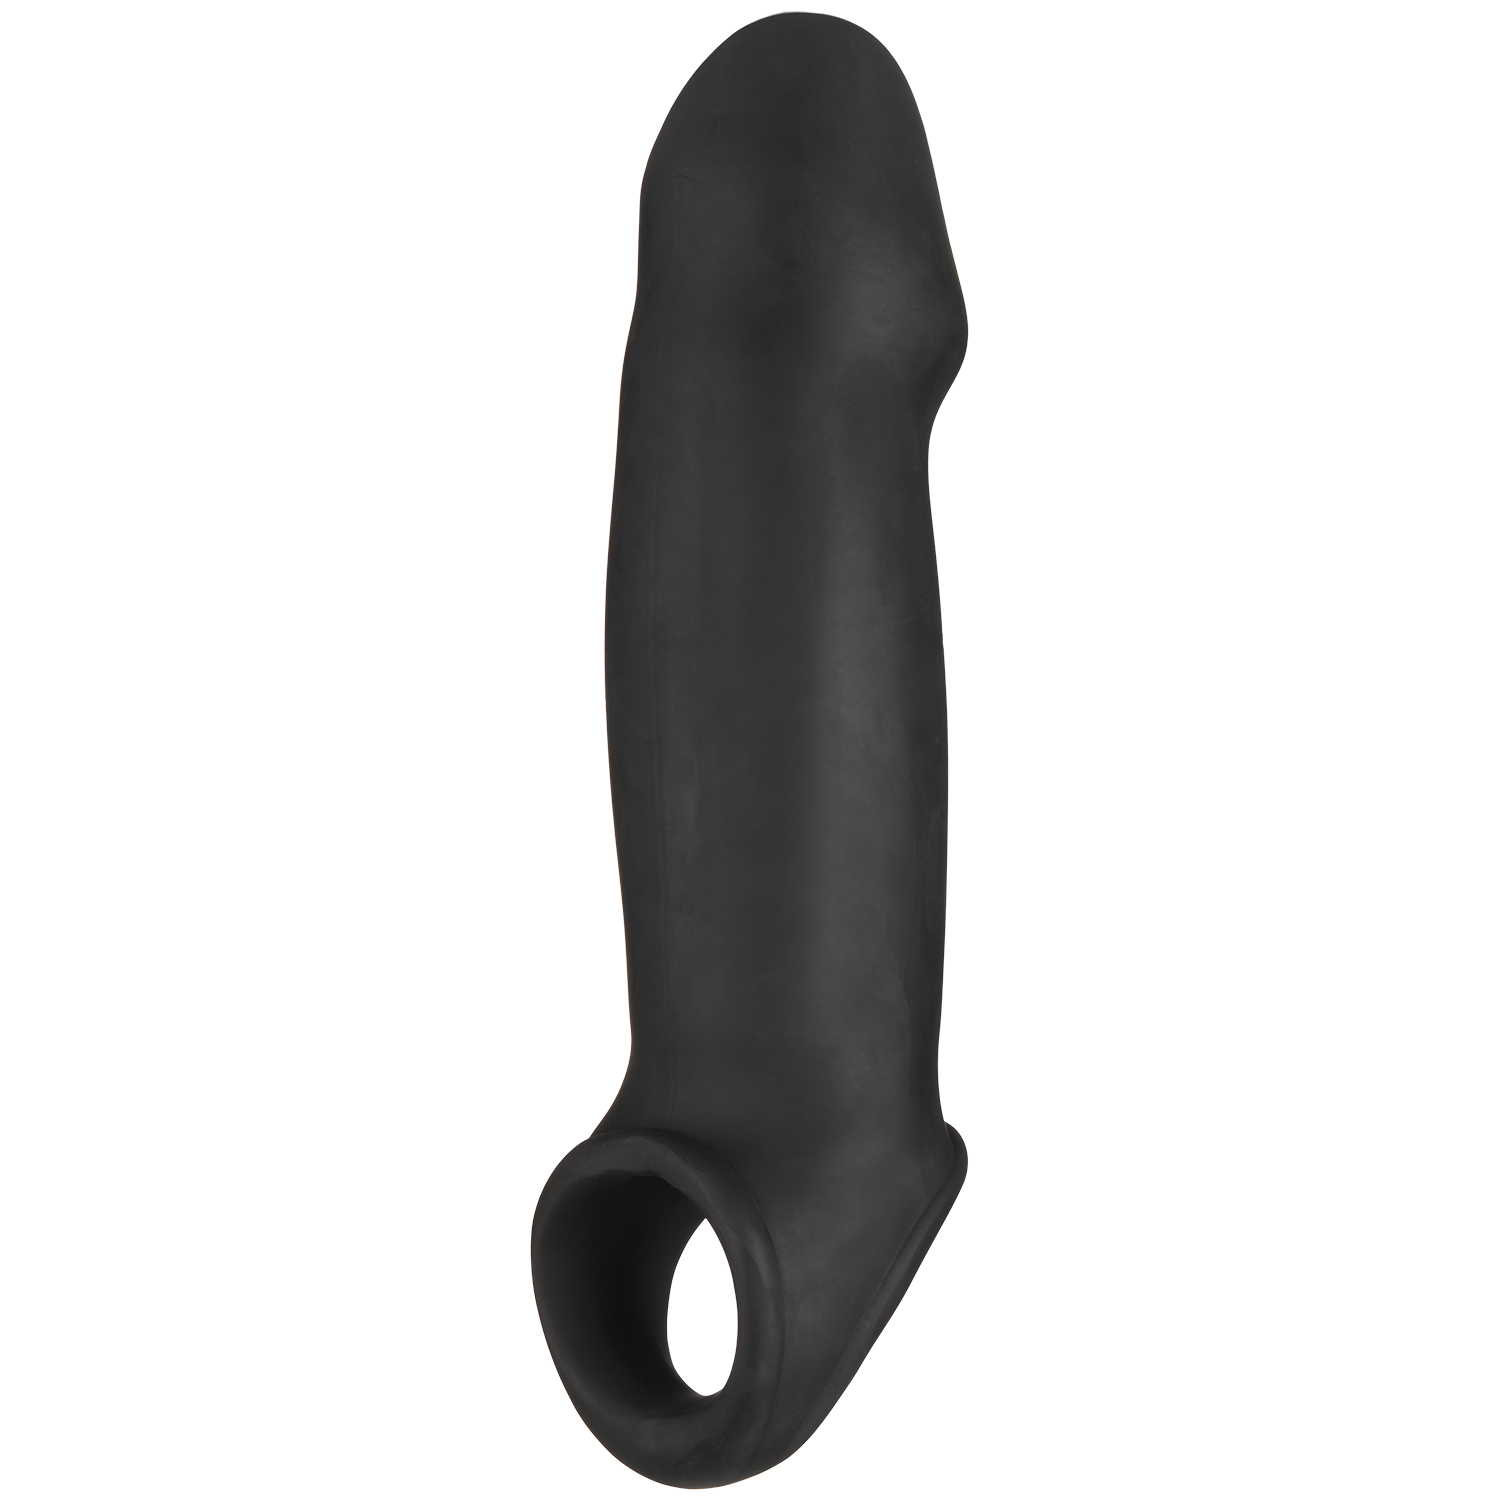 SONO No 17 Dong Extension Penis Sleeve - Black thumbnail